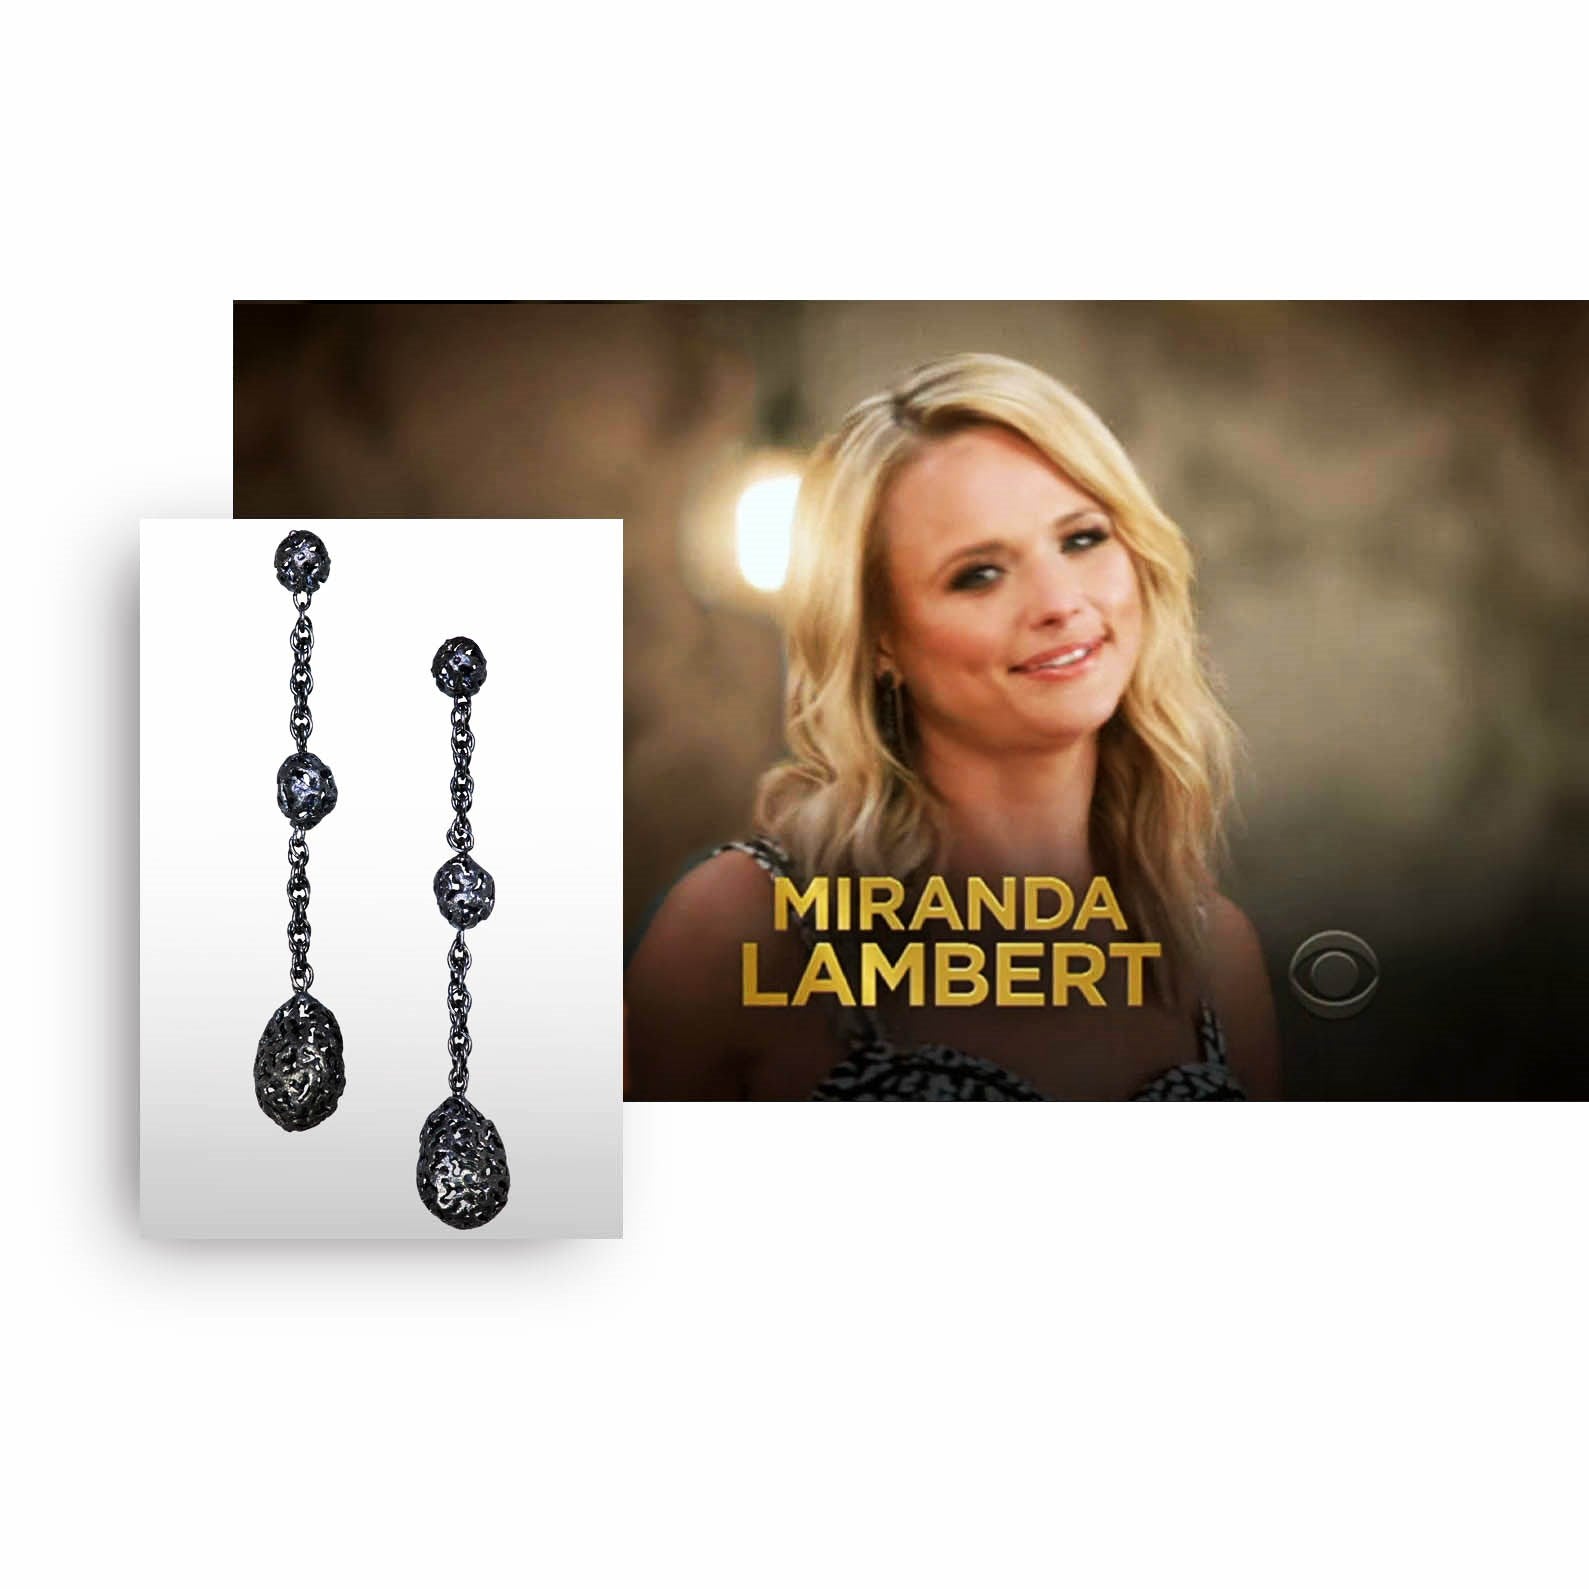 Miranda Lambert wearing Alex Soldier’s Meteorite earrings